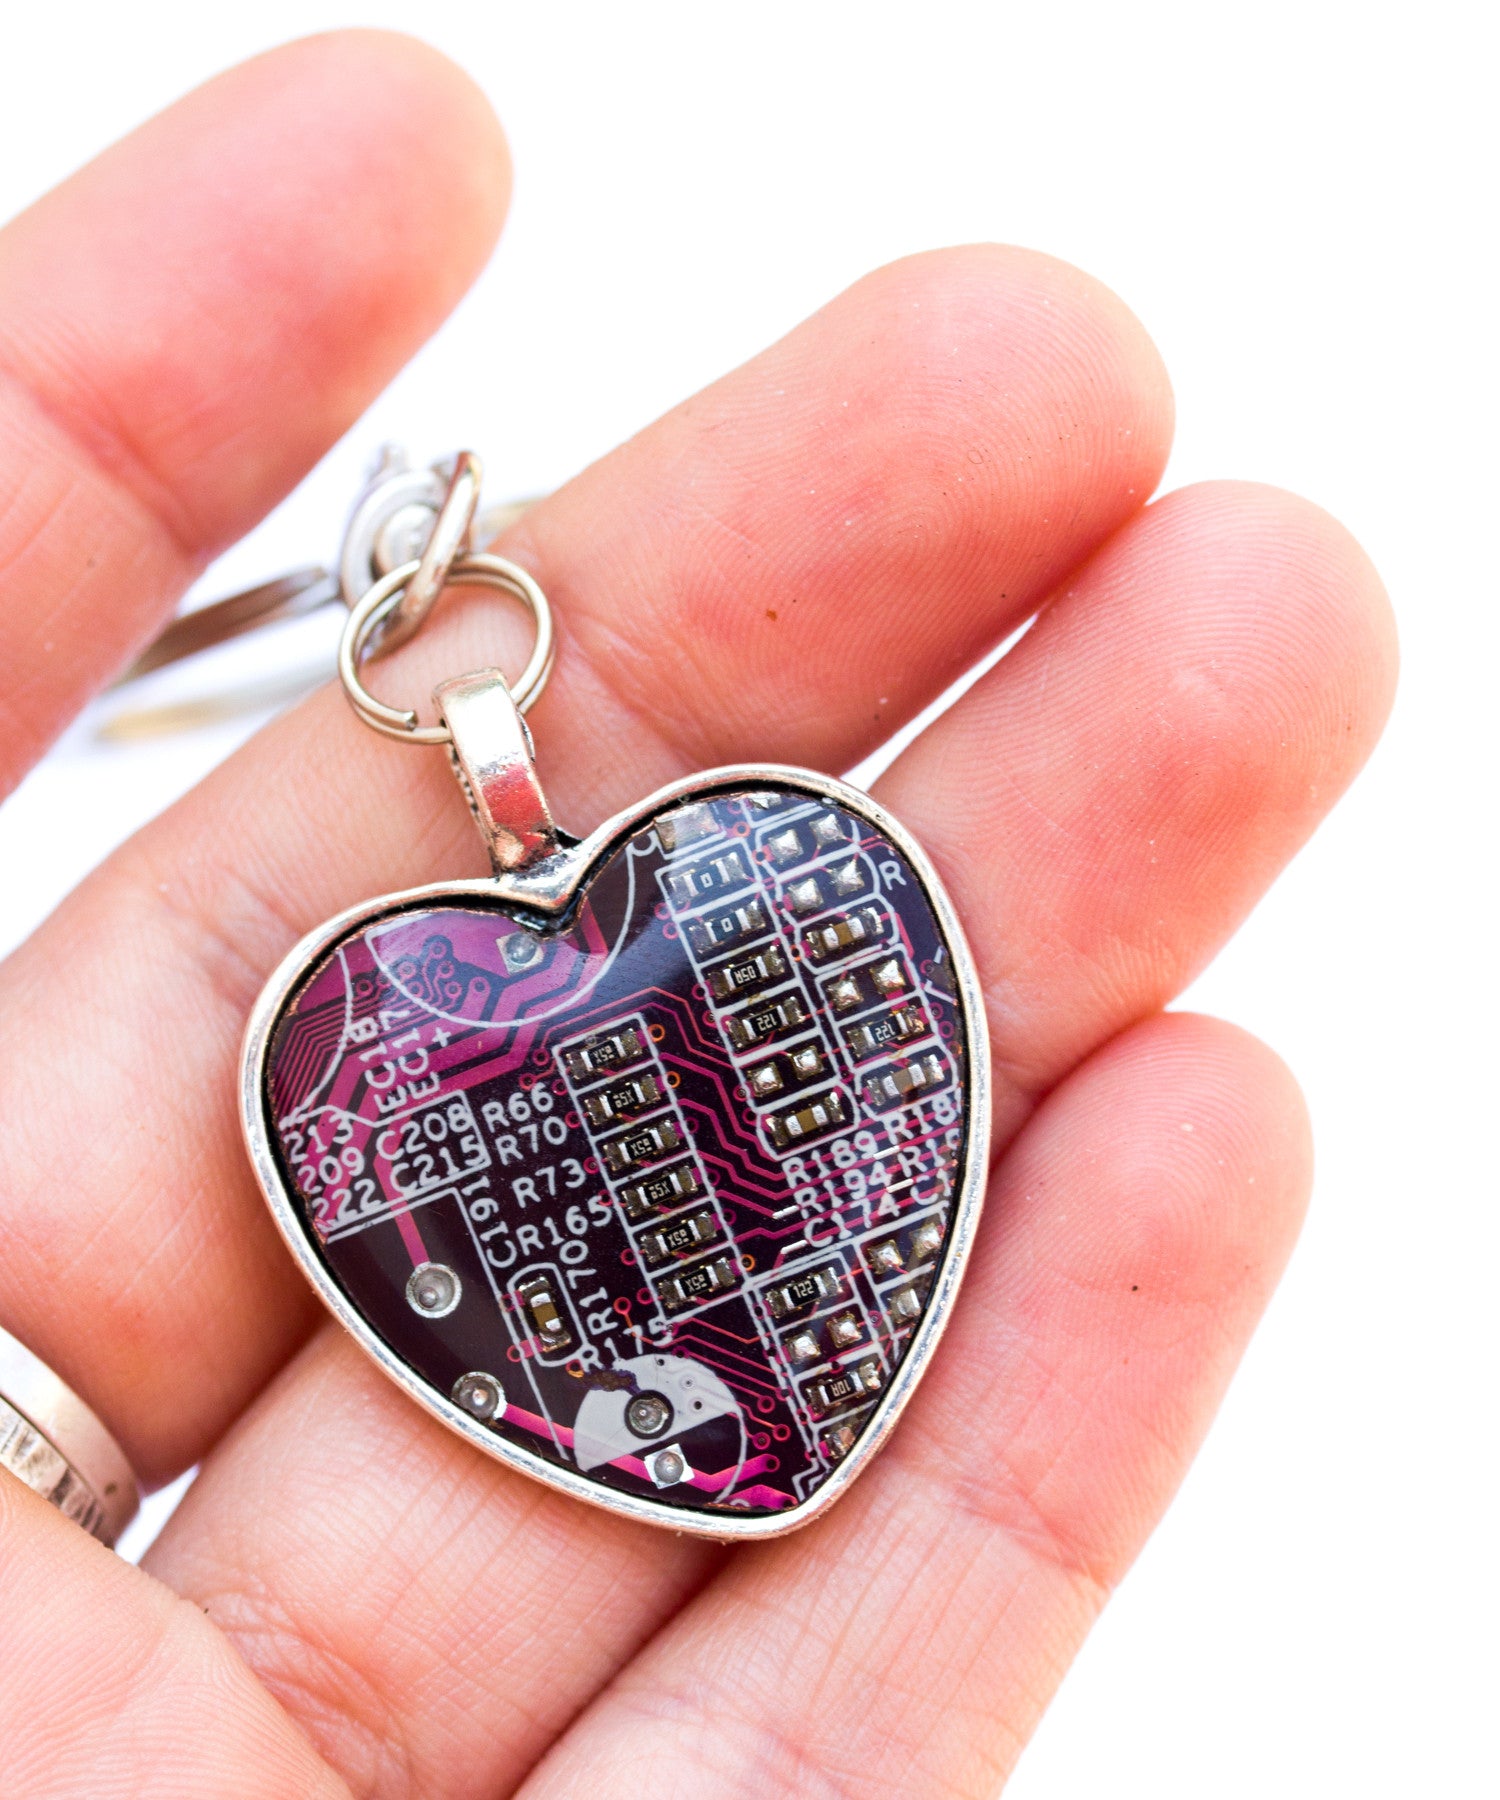 Circuit board keychain heart shaped